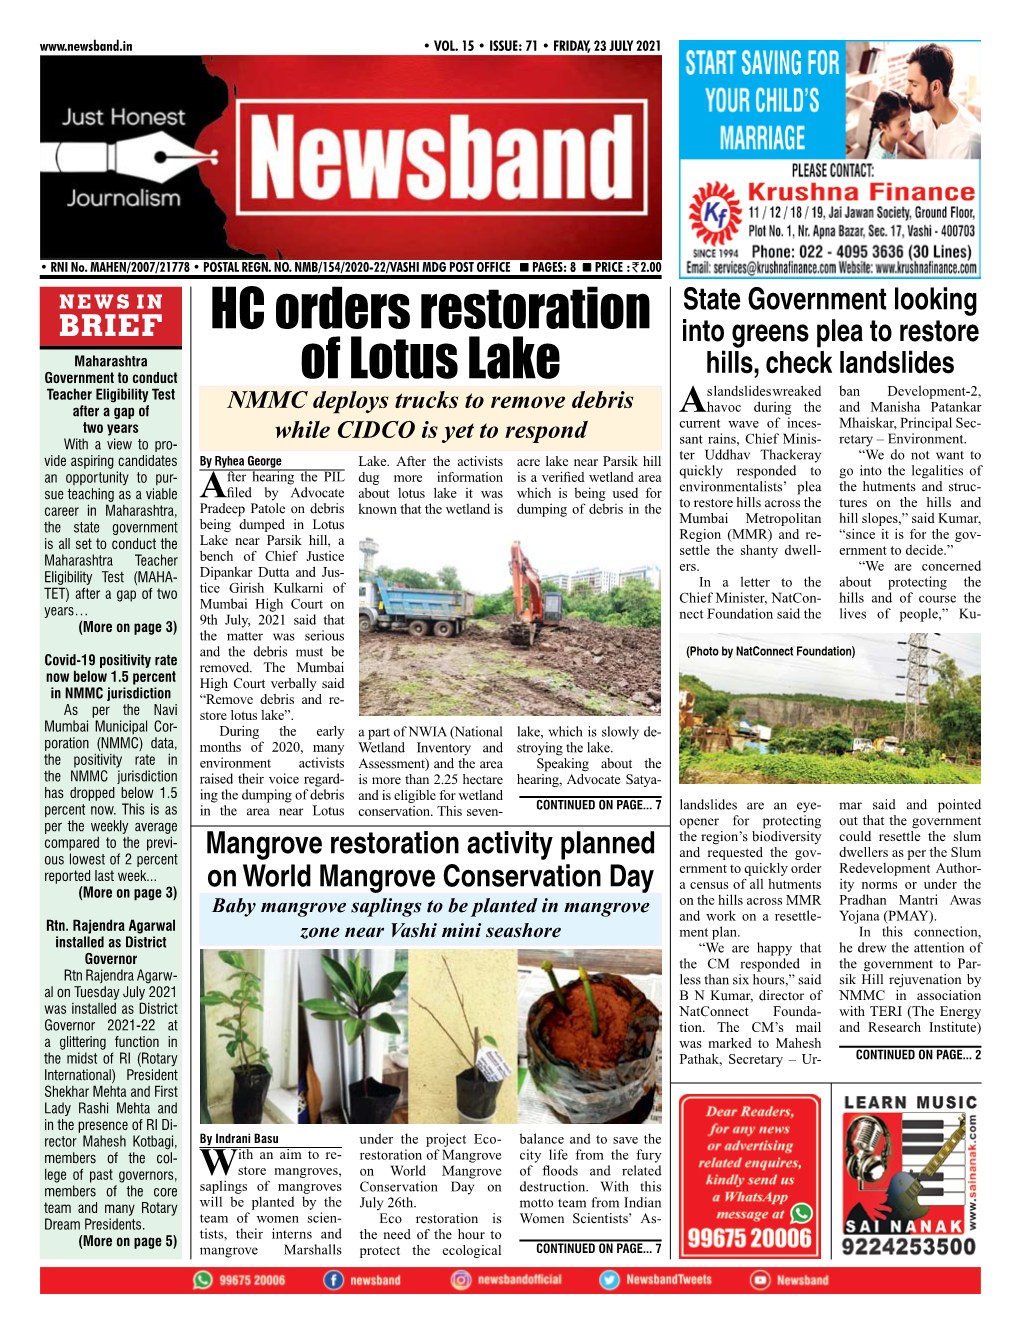 HC Orders Restoration of Lotus Lake